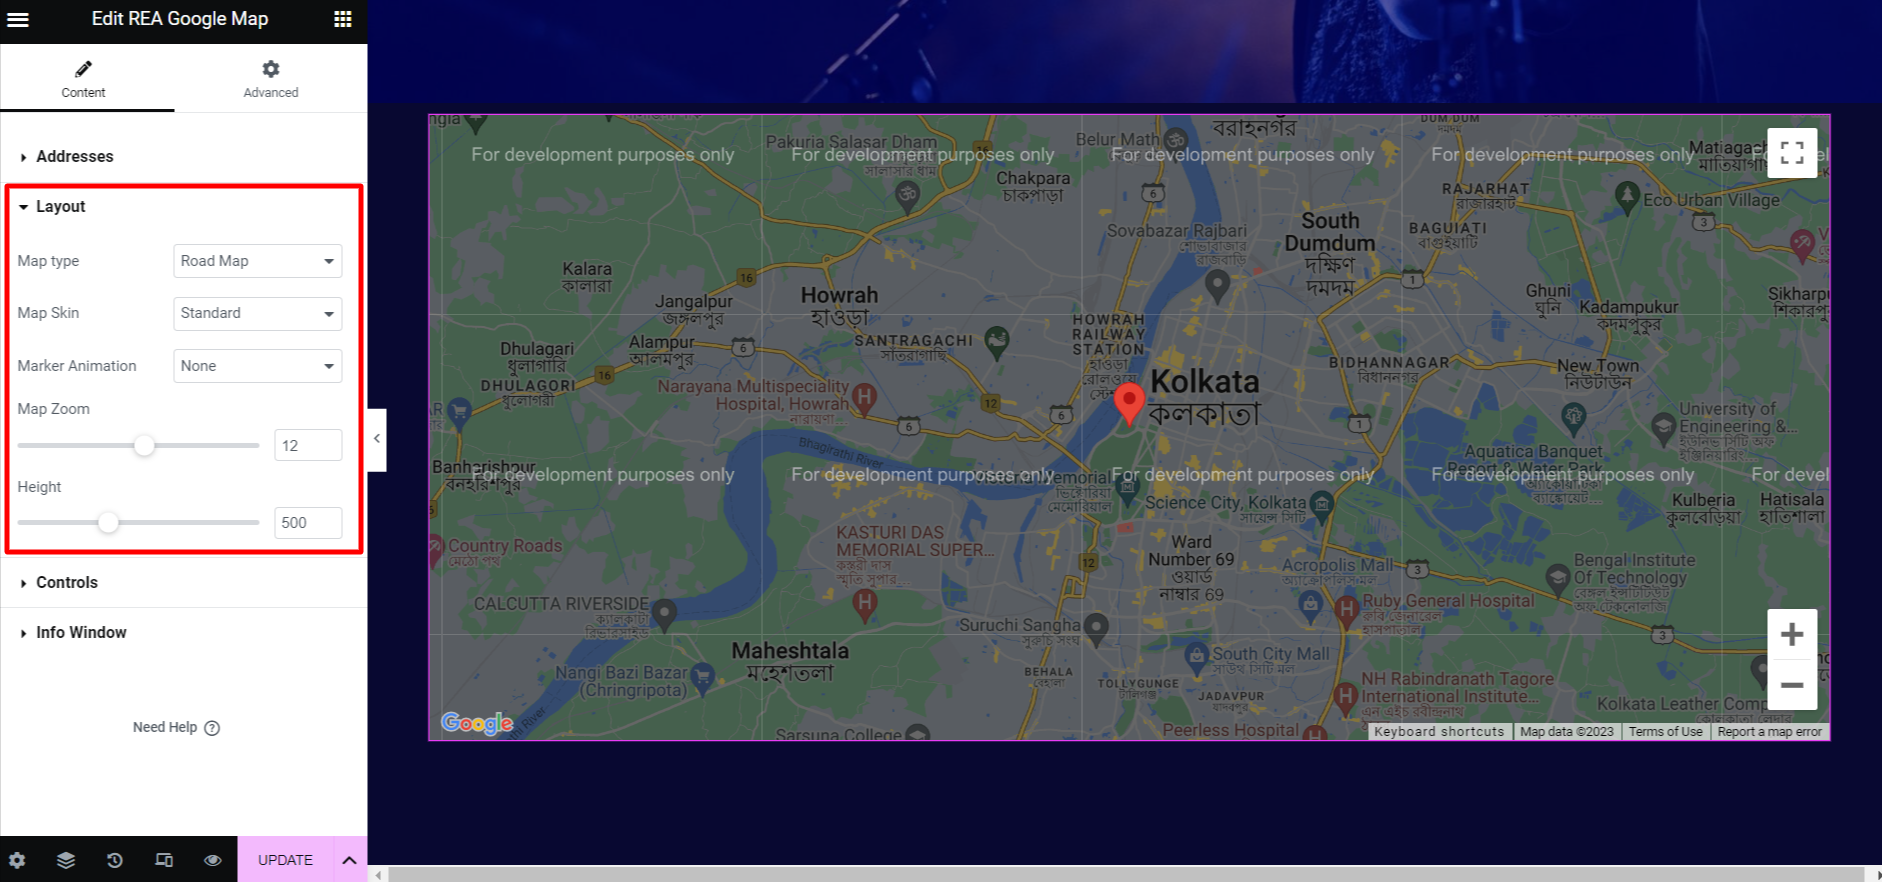 REA Google Maps- Layout